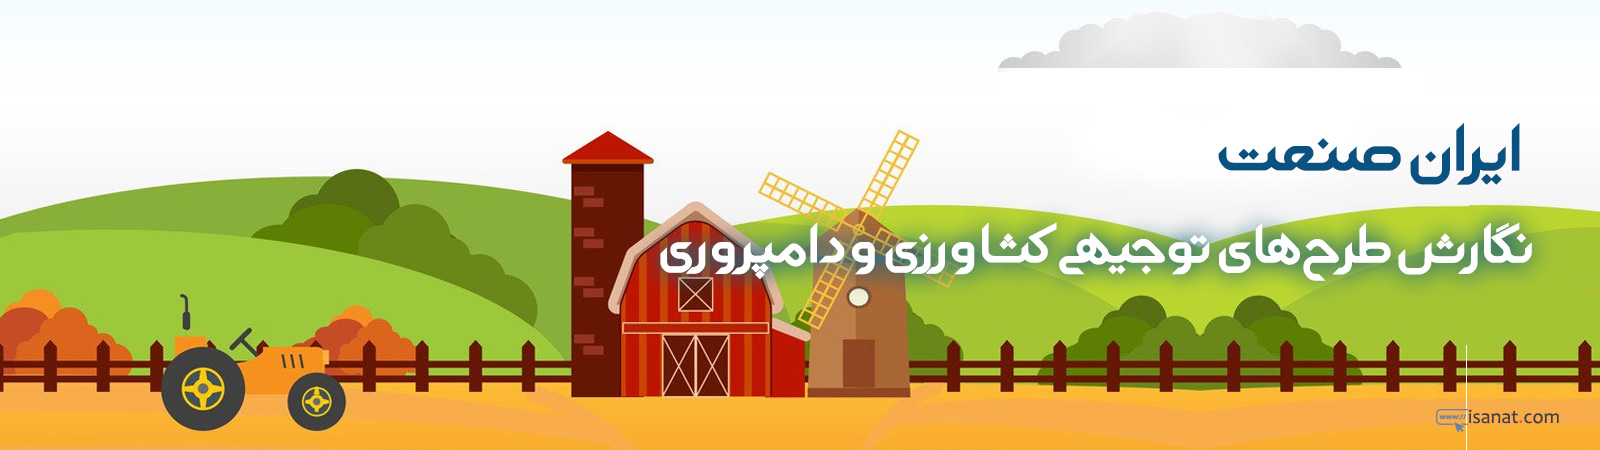 ایران صنعت - نگارش طرح توجیهی کشاورزی و دامپروری